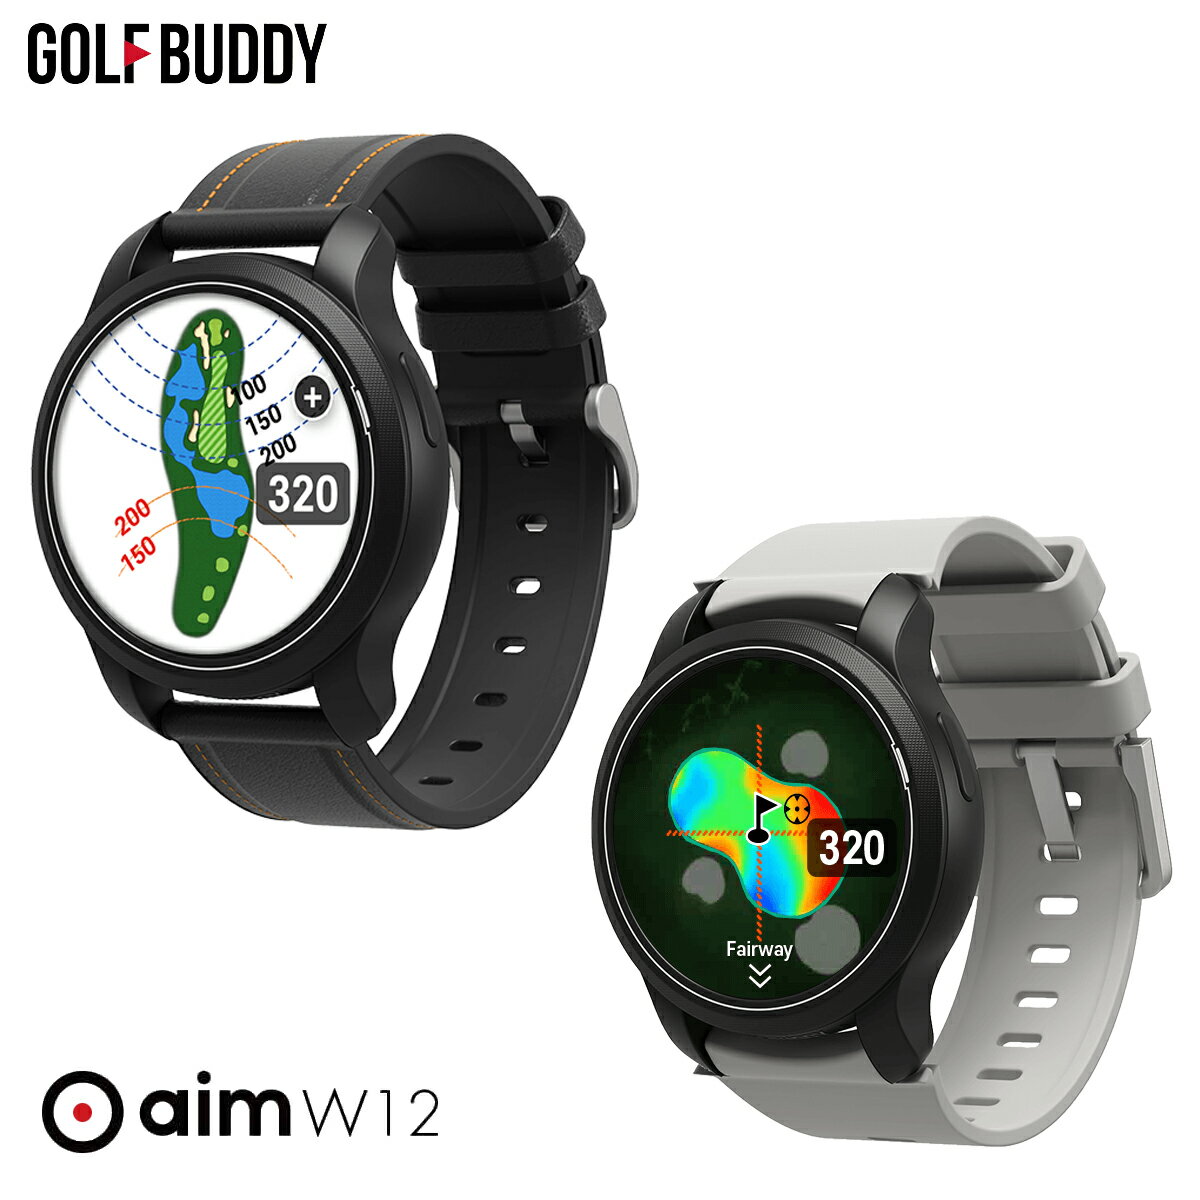 GOLFBUDDY ゴルフバディ正規品 aim W12 腕時計型GPS watch ゴルフナビ ウォッチ 「 GPS距離測定器 」 